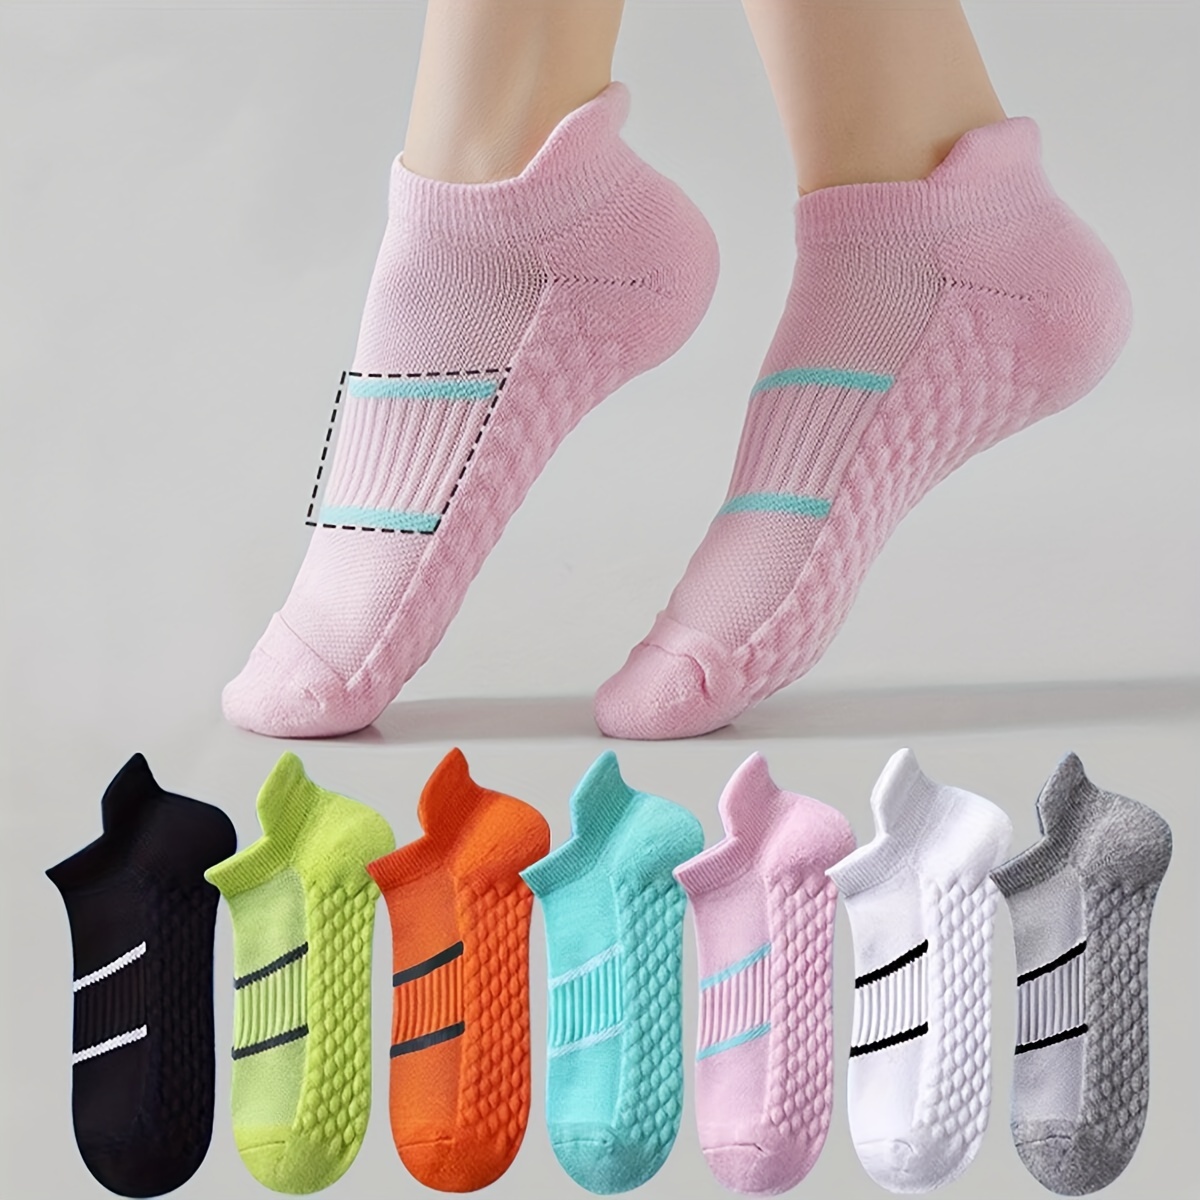 

7 Pairs Stripe Pattern Textured Socks, Comfy & Sporty Short Socks, Women's Stockings & Hosiery